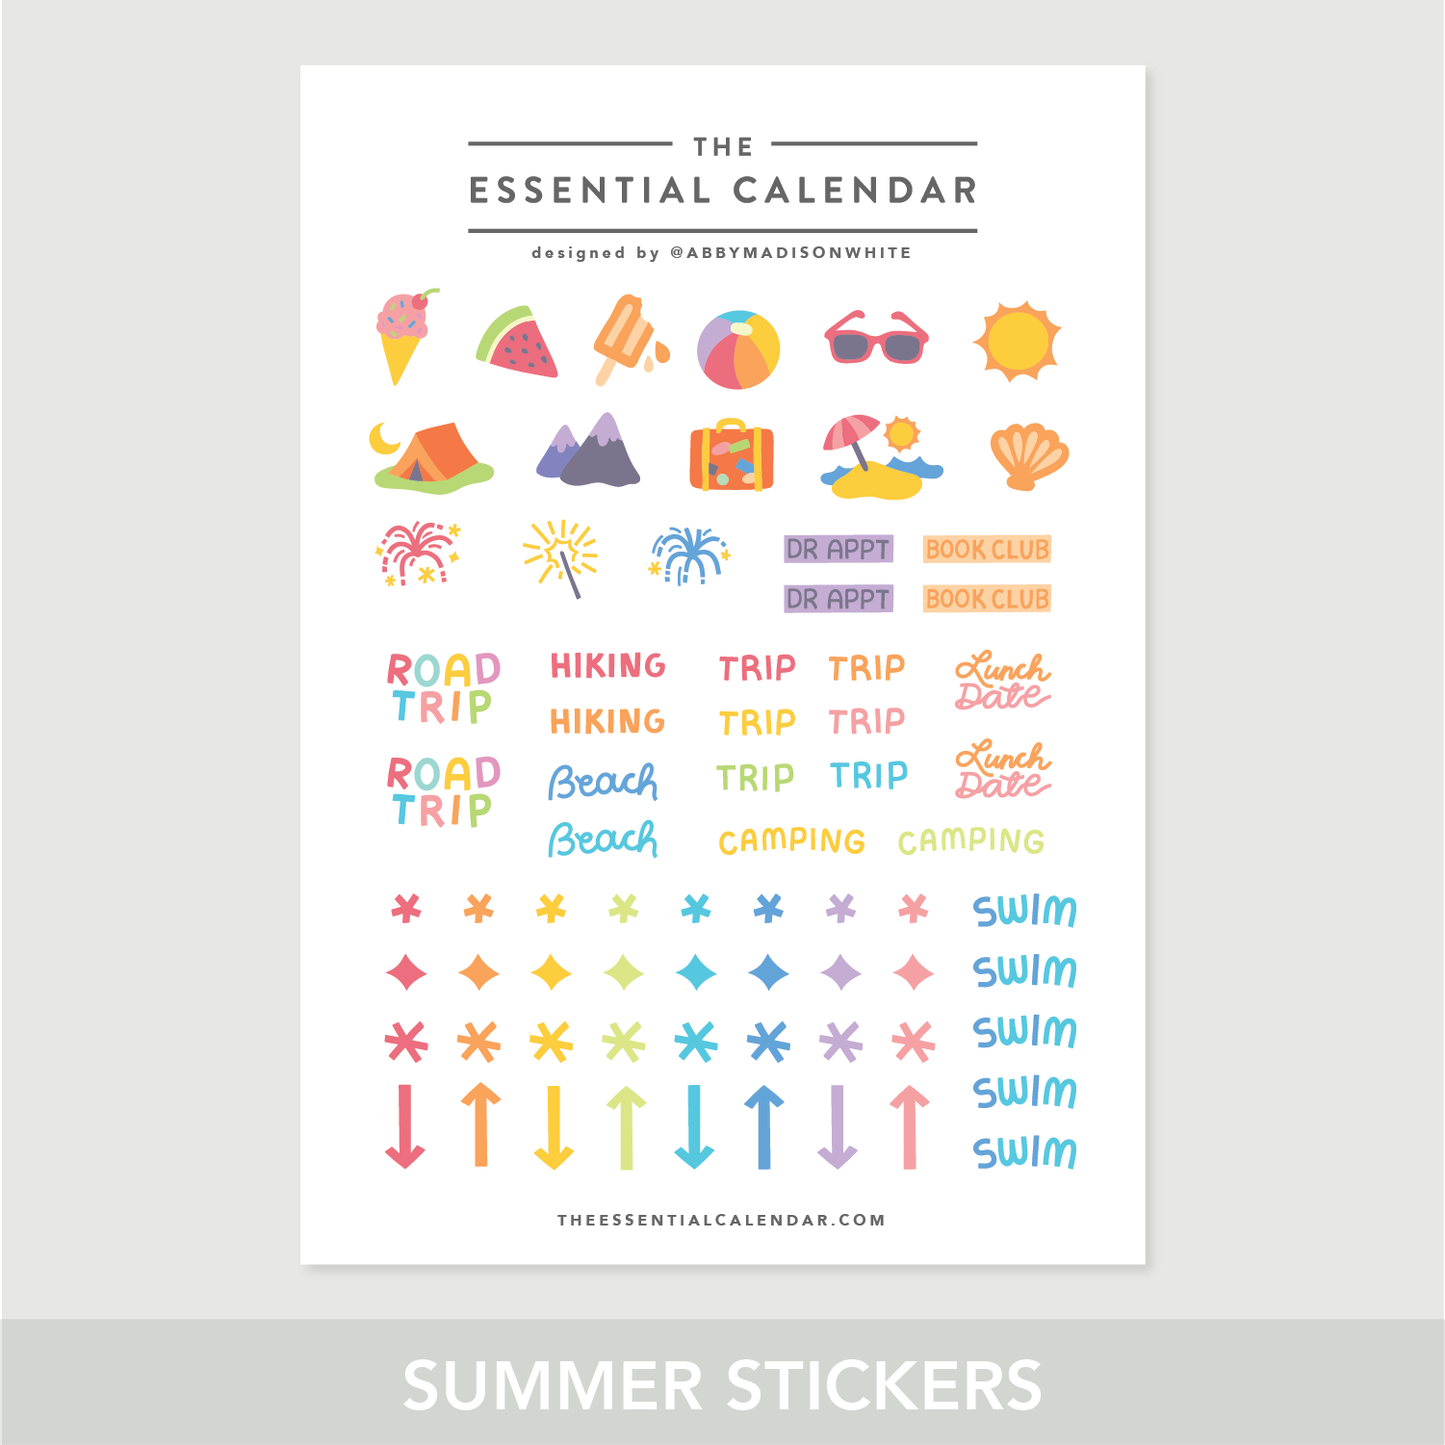 Sticker Sheets